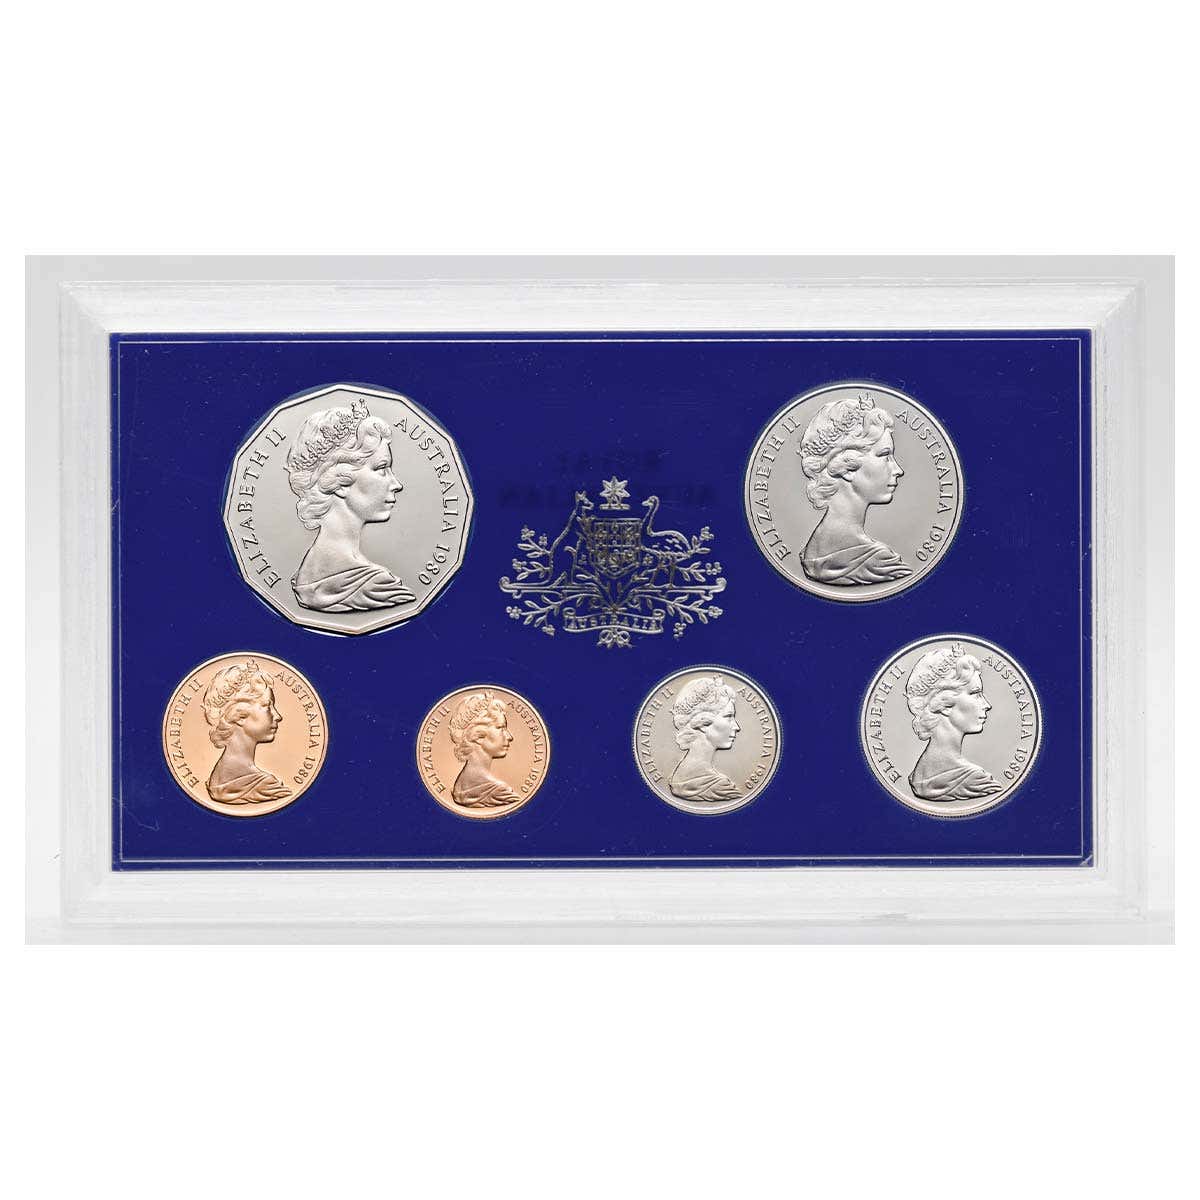 Australia 1980 6-Coin Proof Set